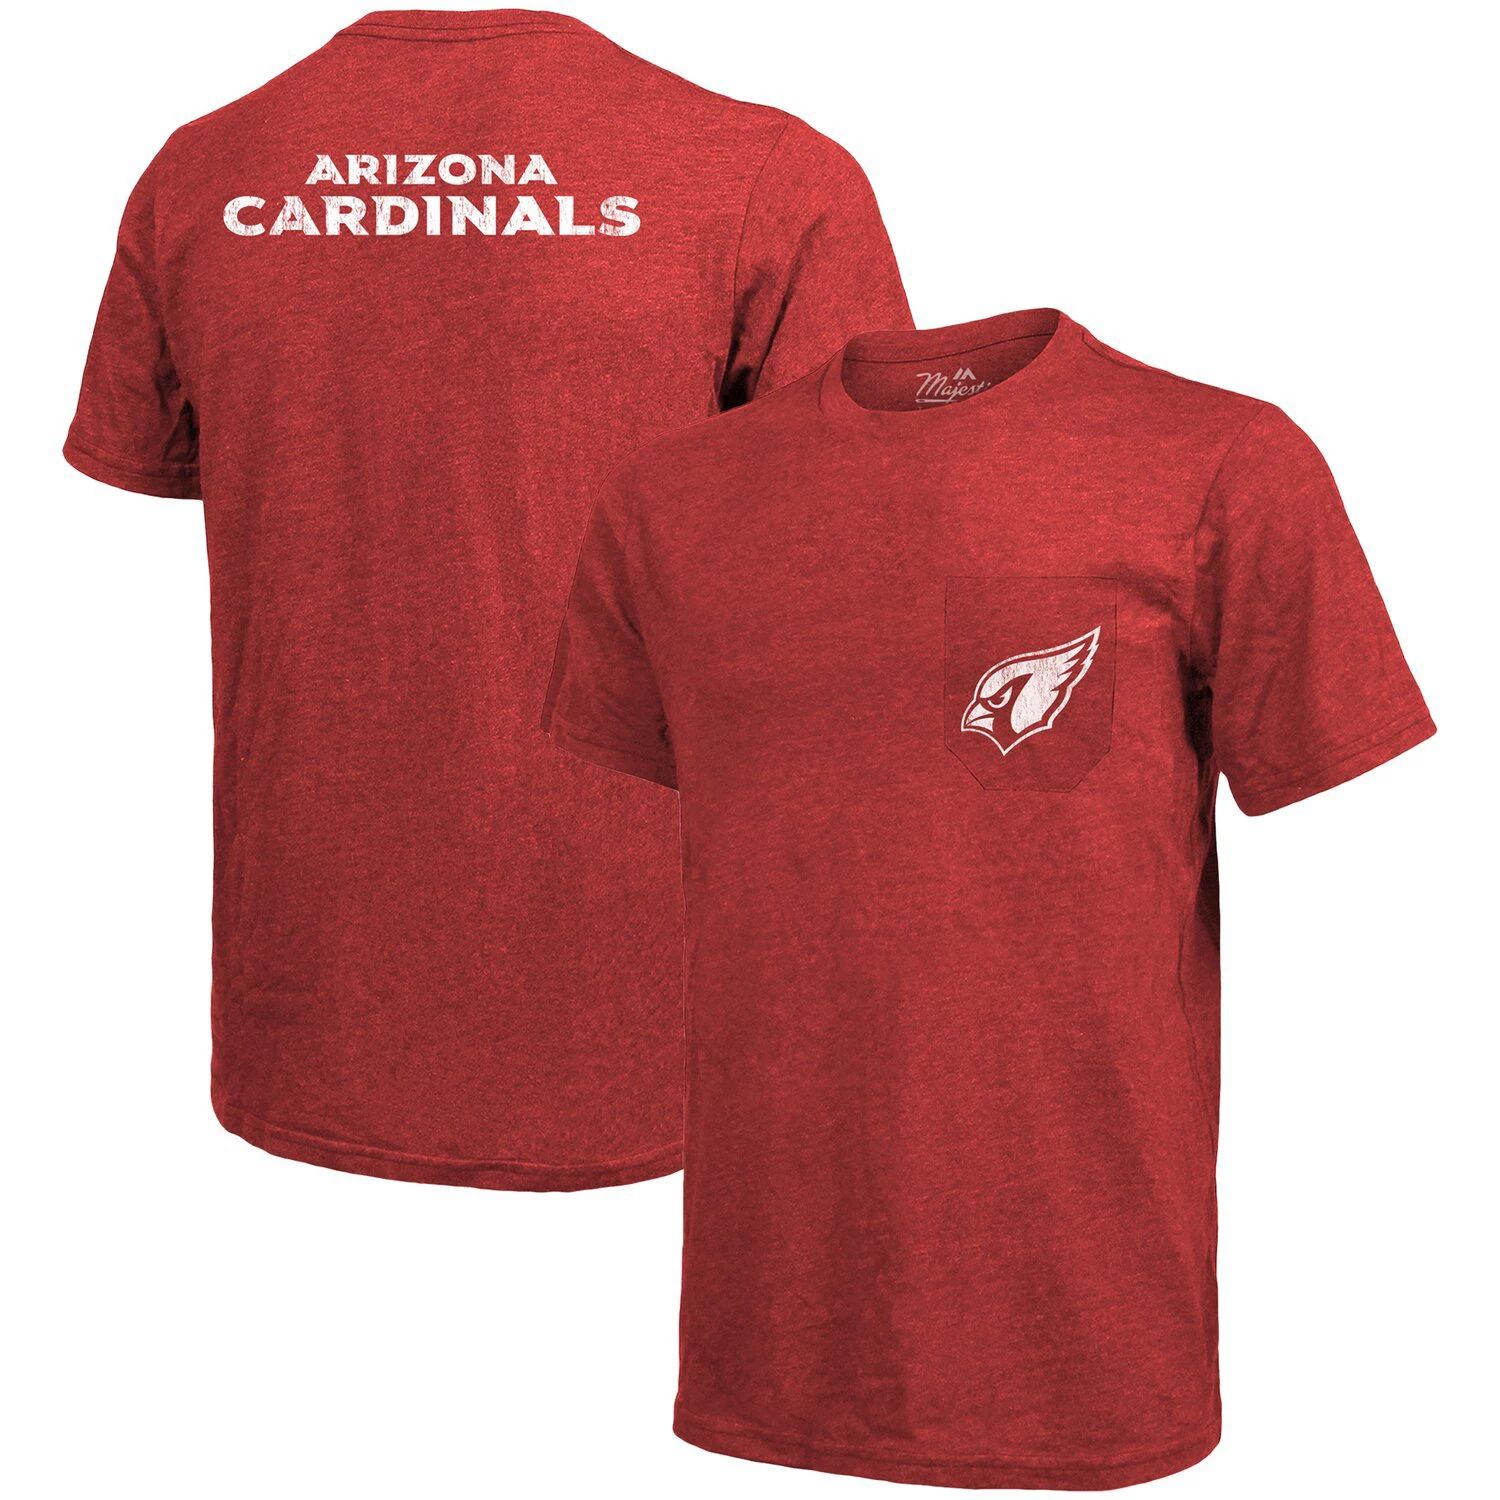 Футболка с карманами Tri-Blend Arizona Cardinals Threads - Cardinal Majestic футболка new england patriots threads с карманами tri blend темно синий с меланжевым отливом majestic